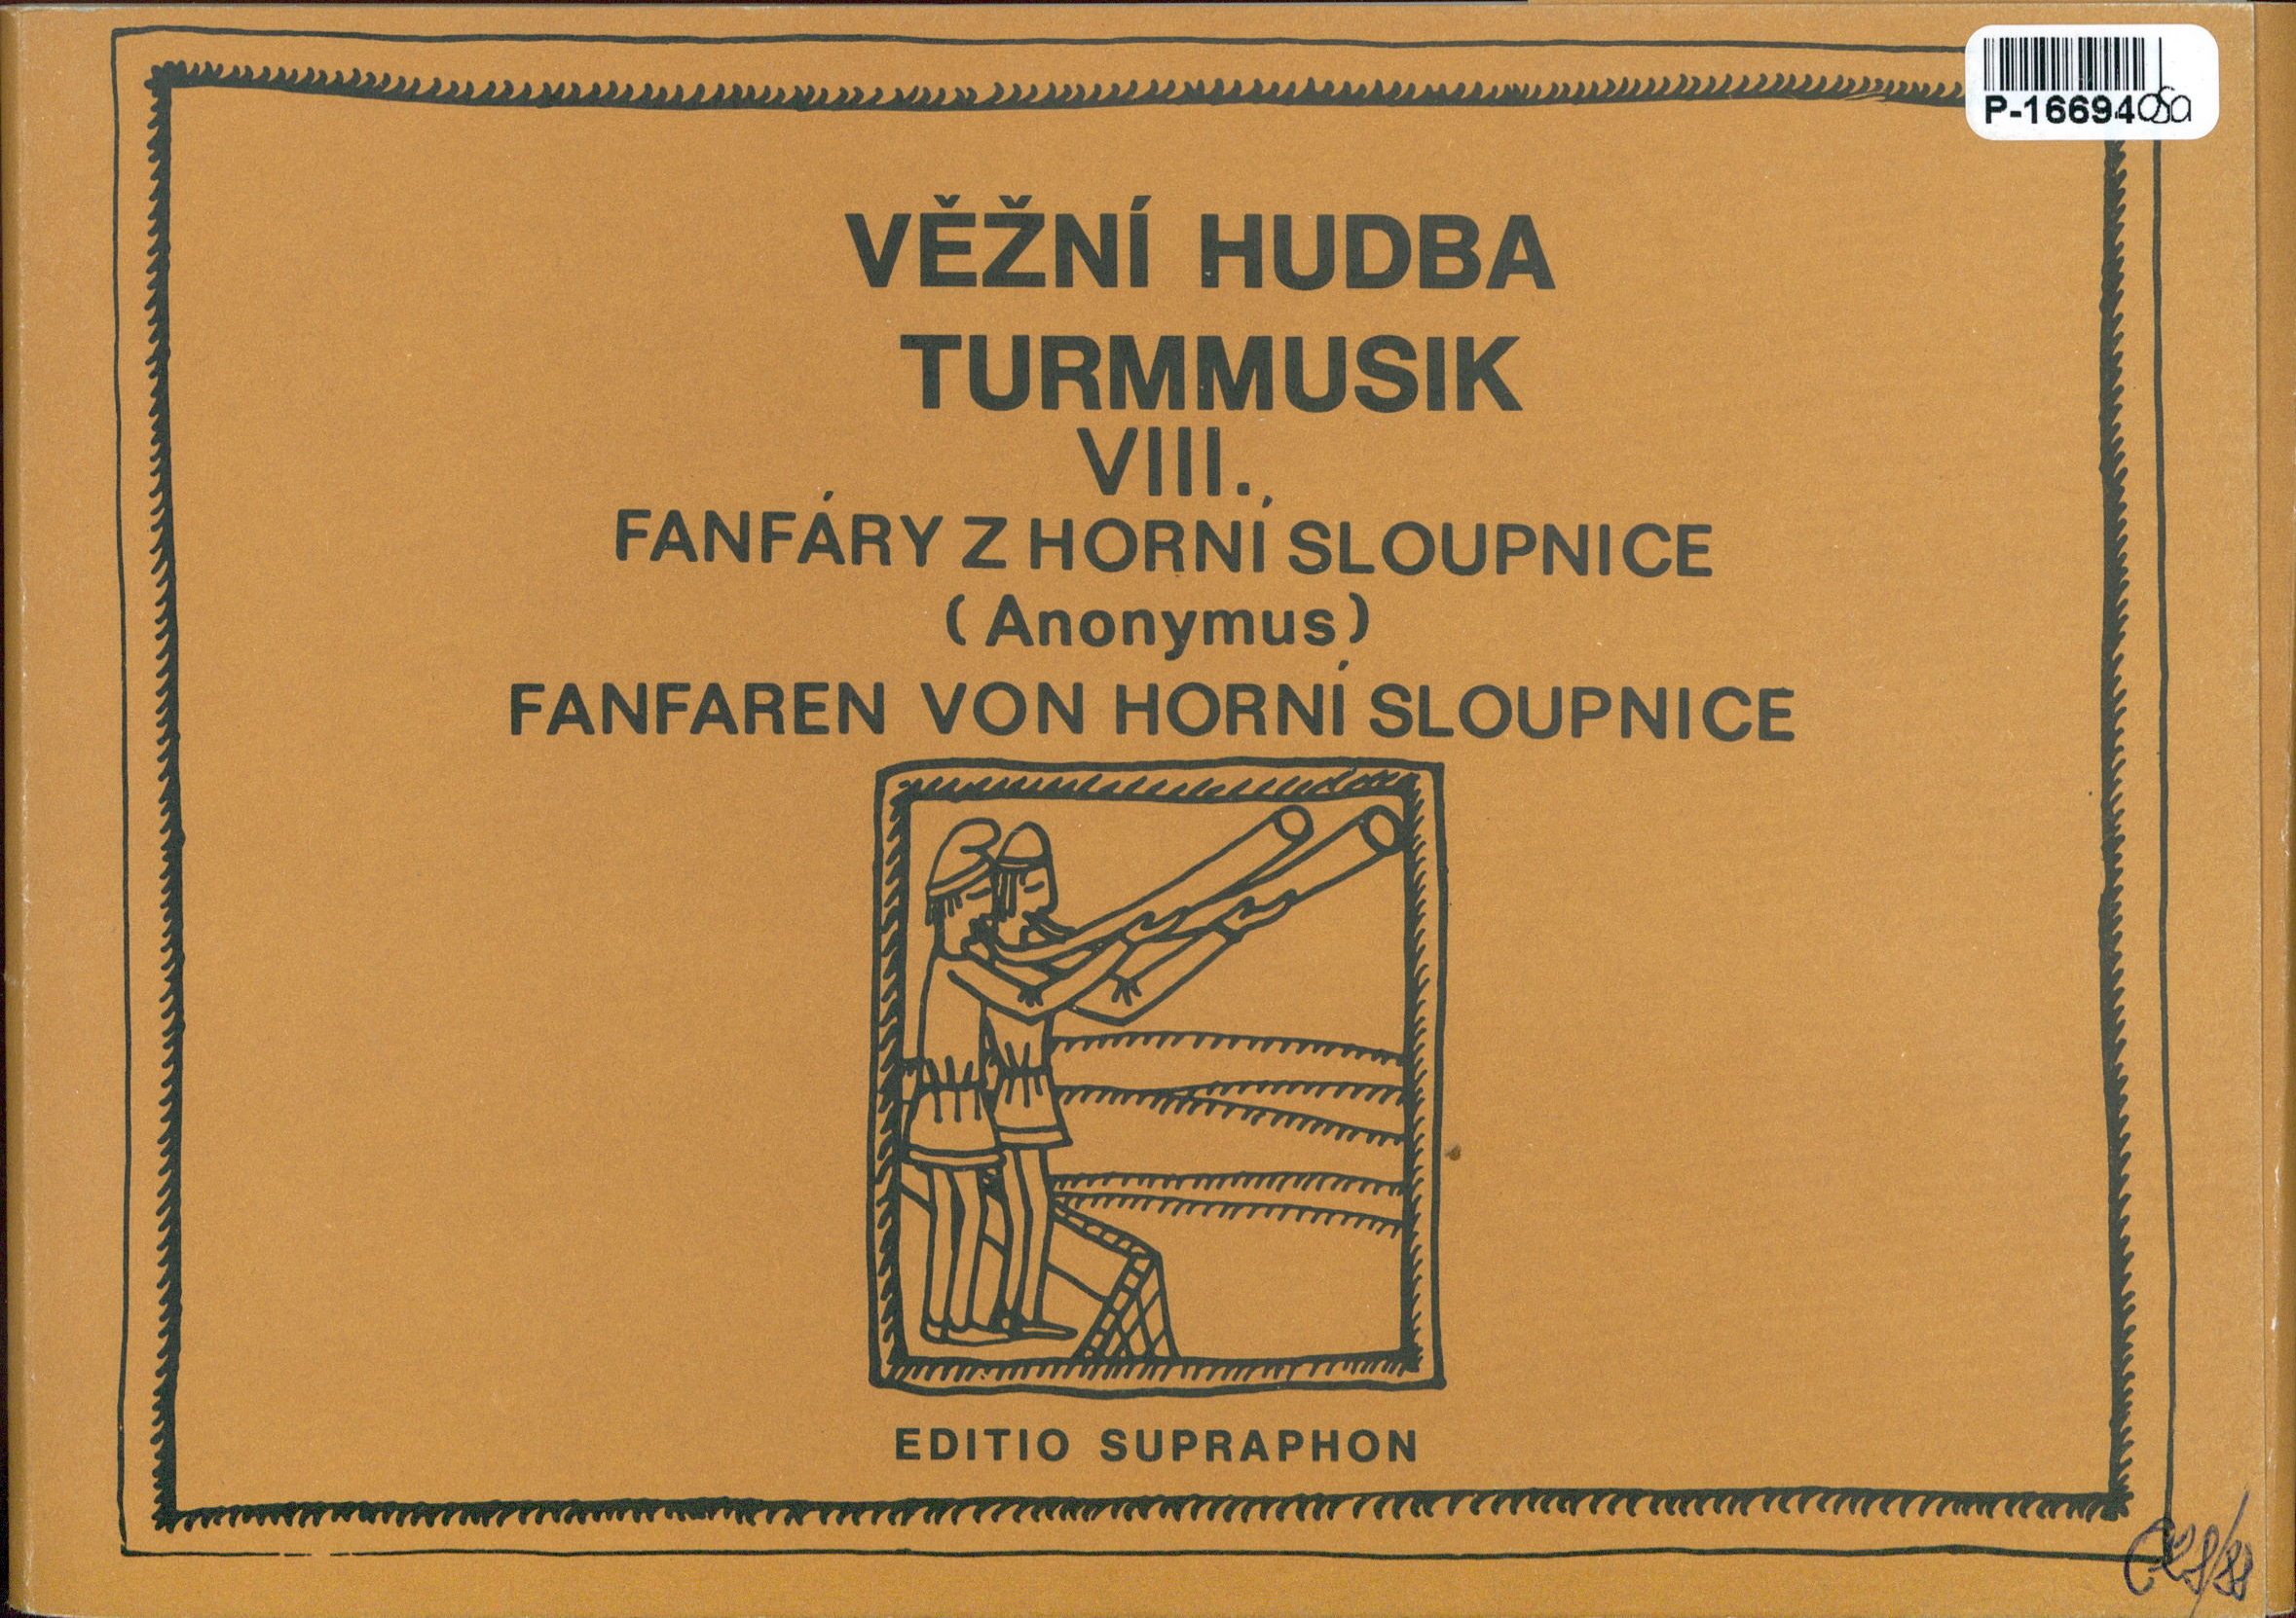 Věžní hudba turmmusik VIII.